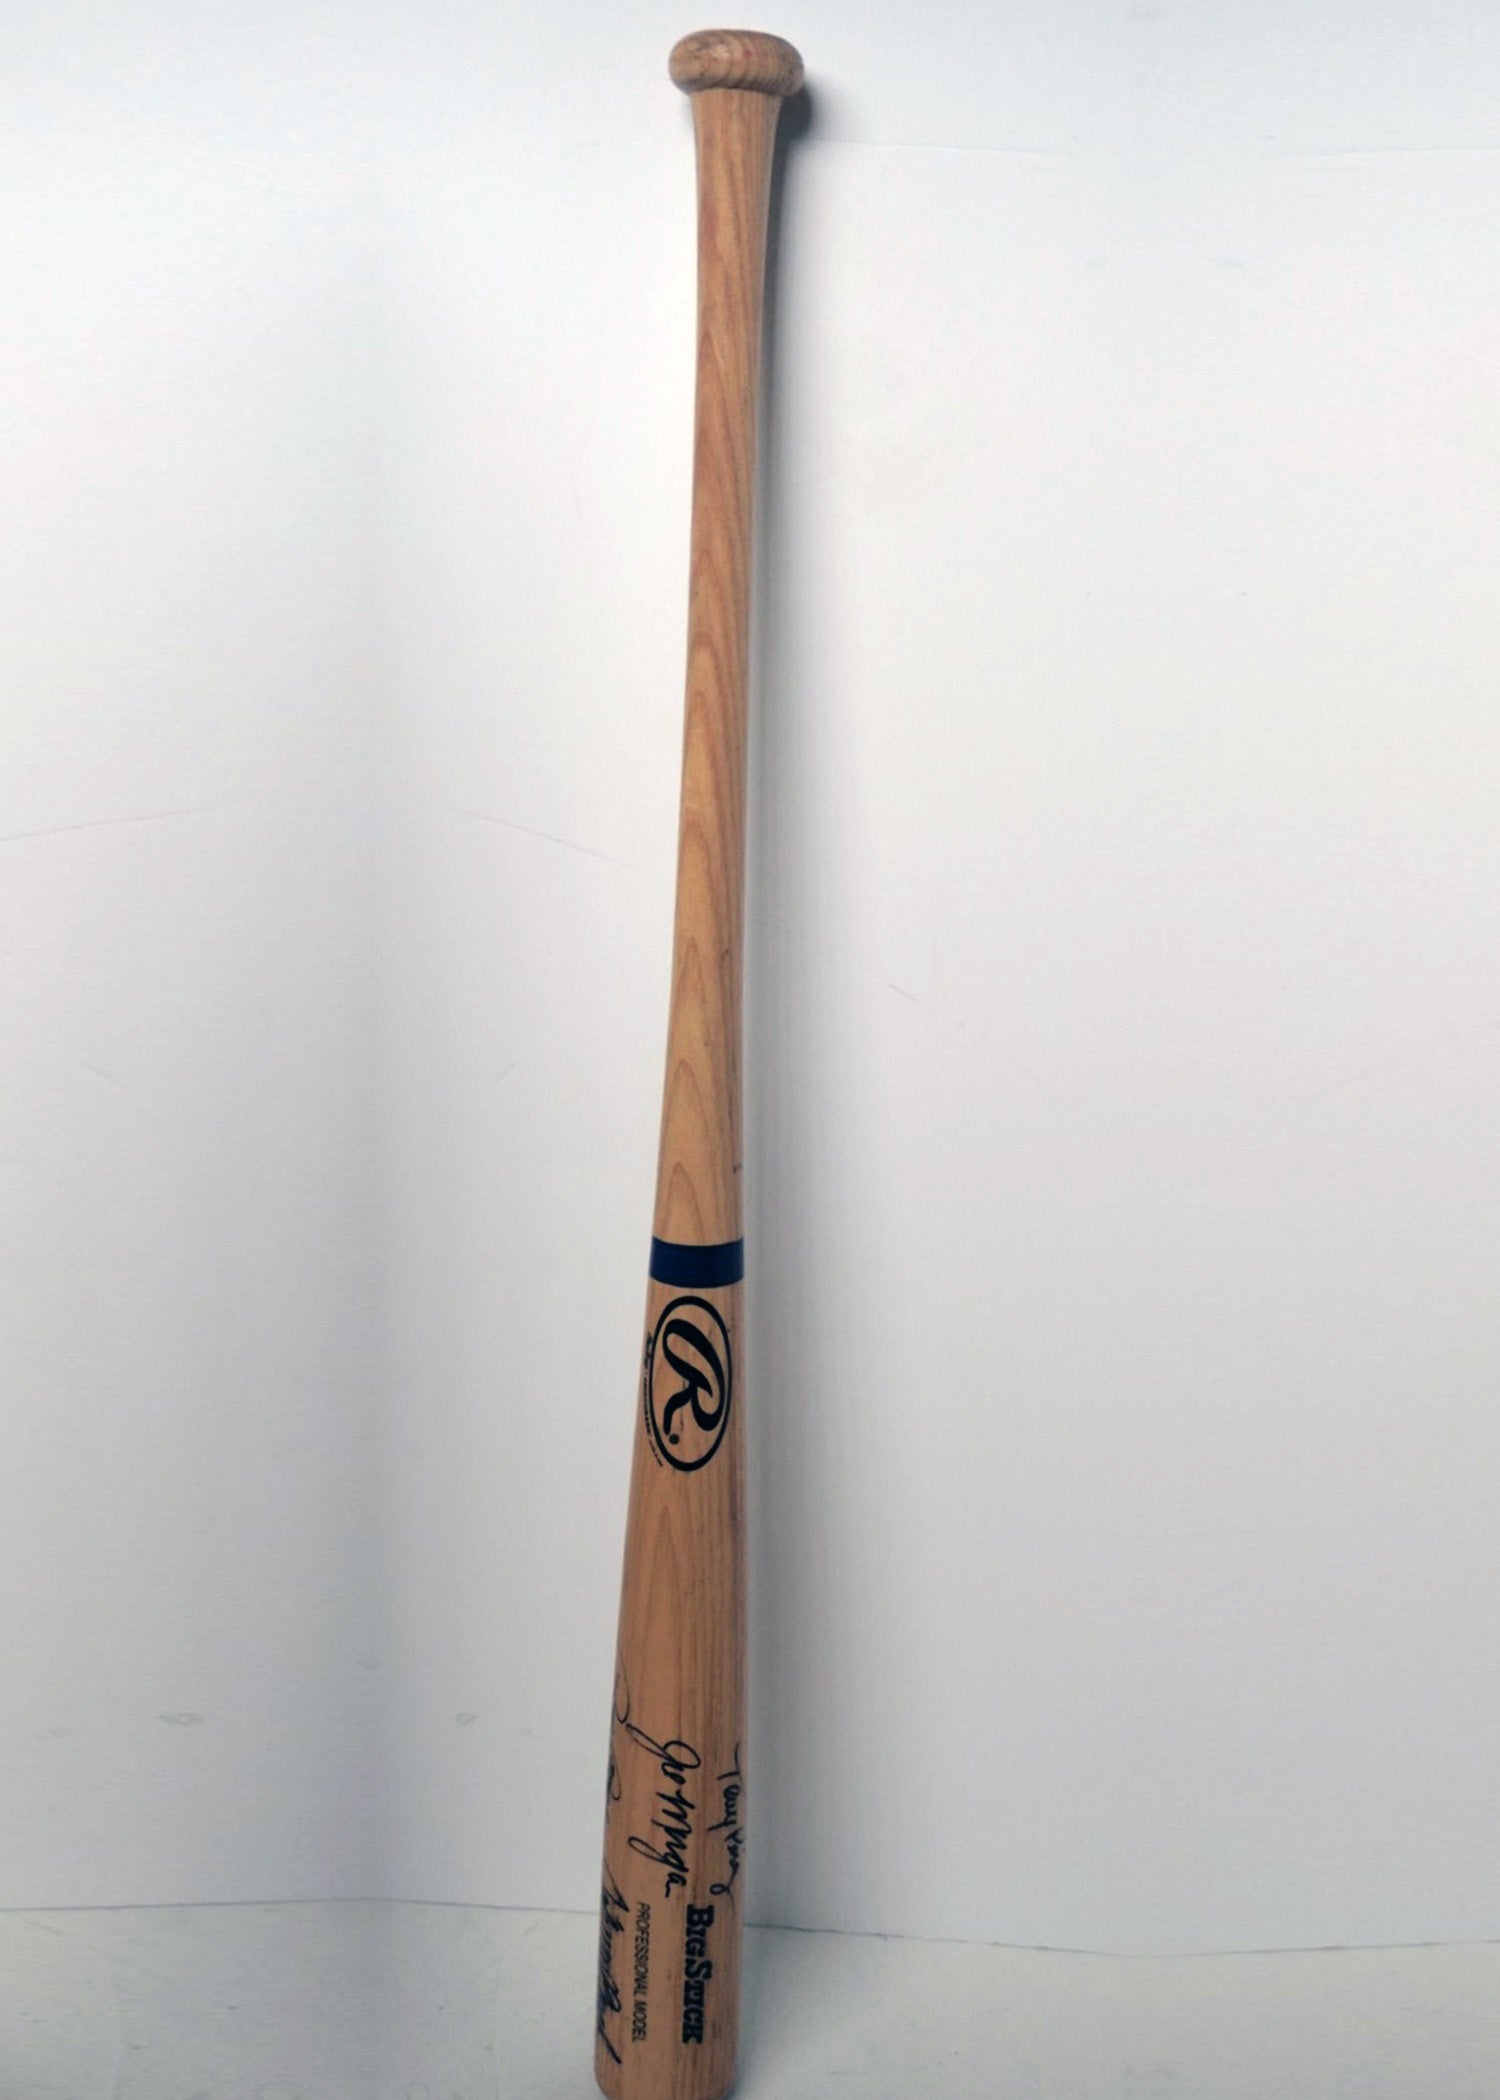 Baseball bat used by Pete Rose, Cincinnati Reds